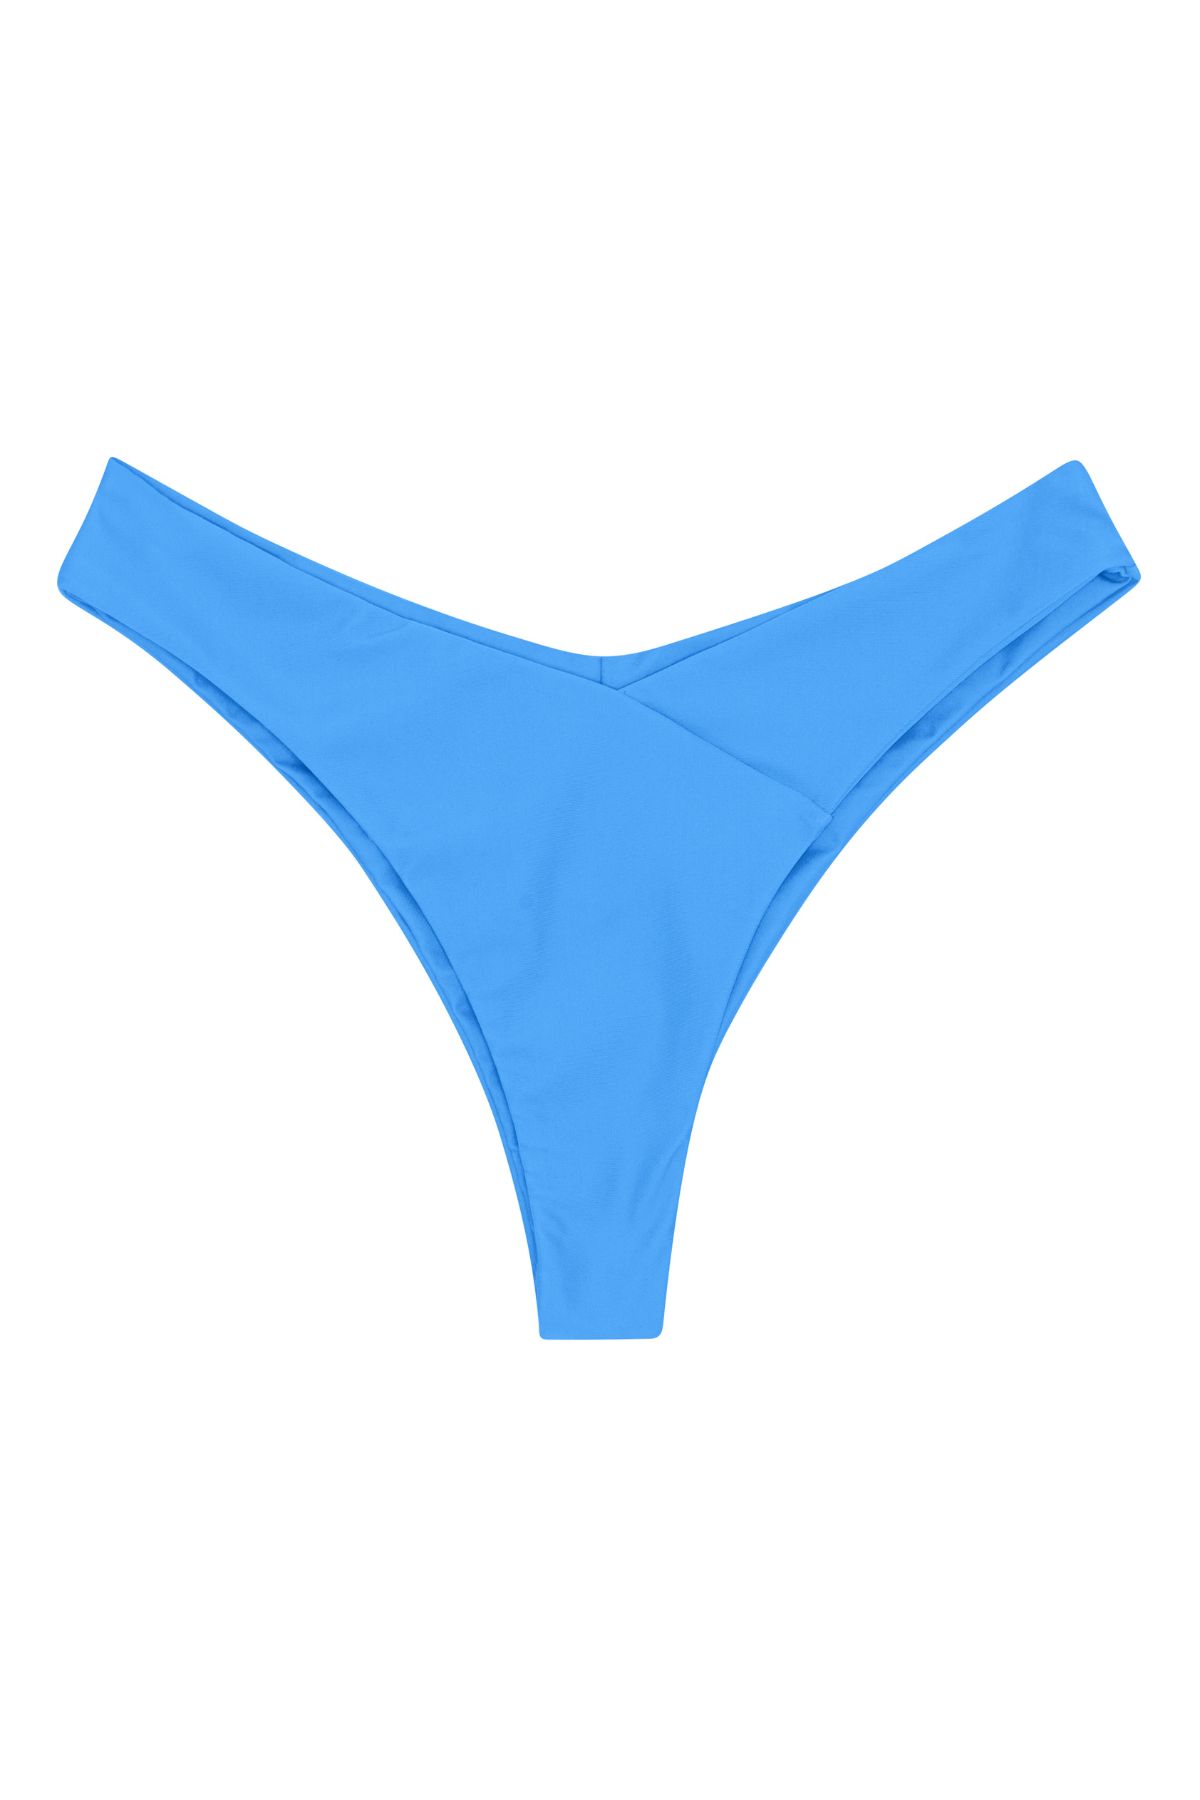 Canggu V-shaped bikini bottom - Sea